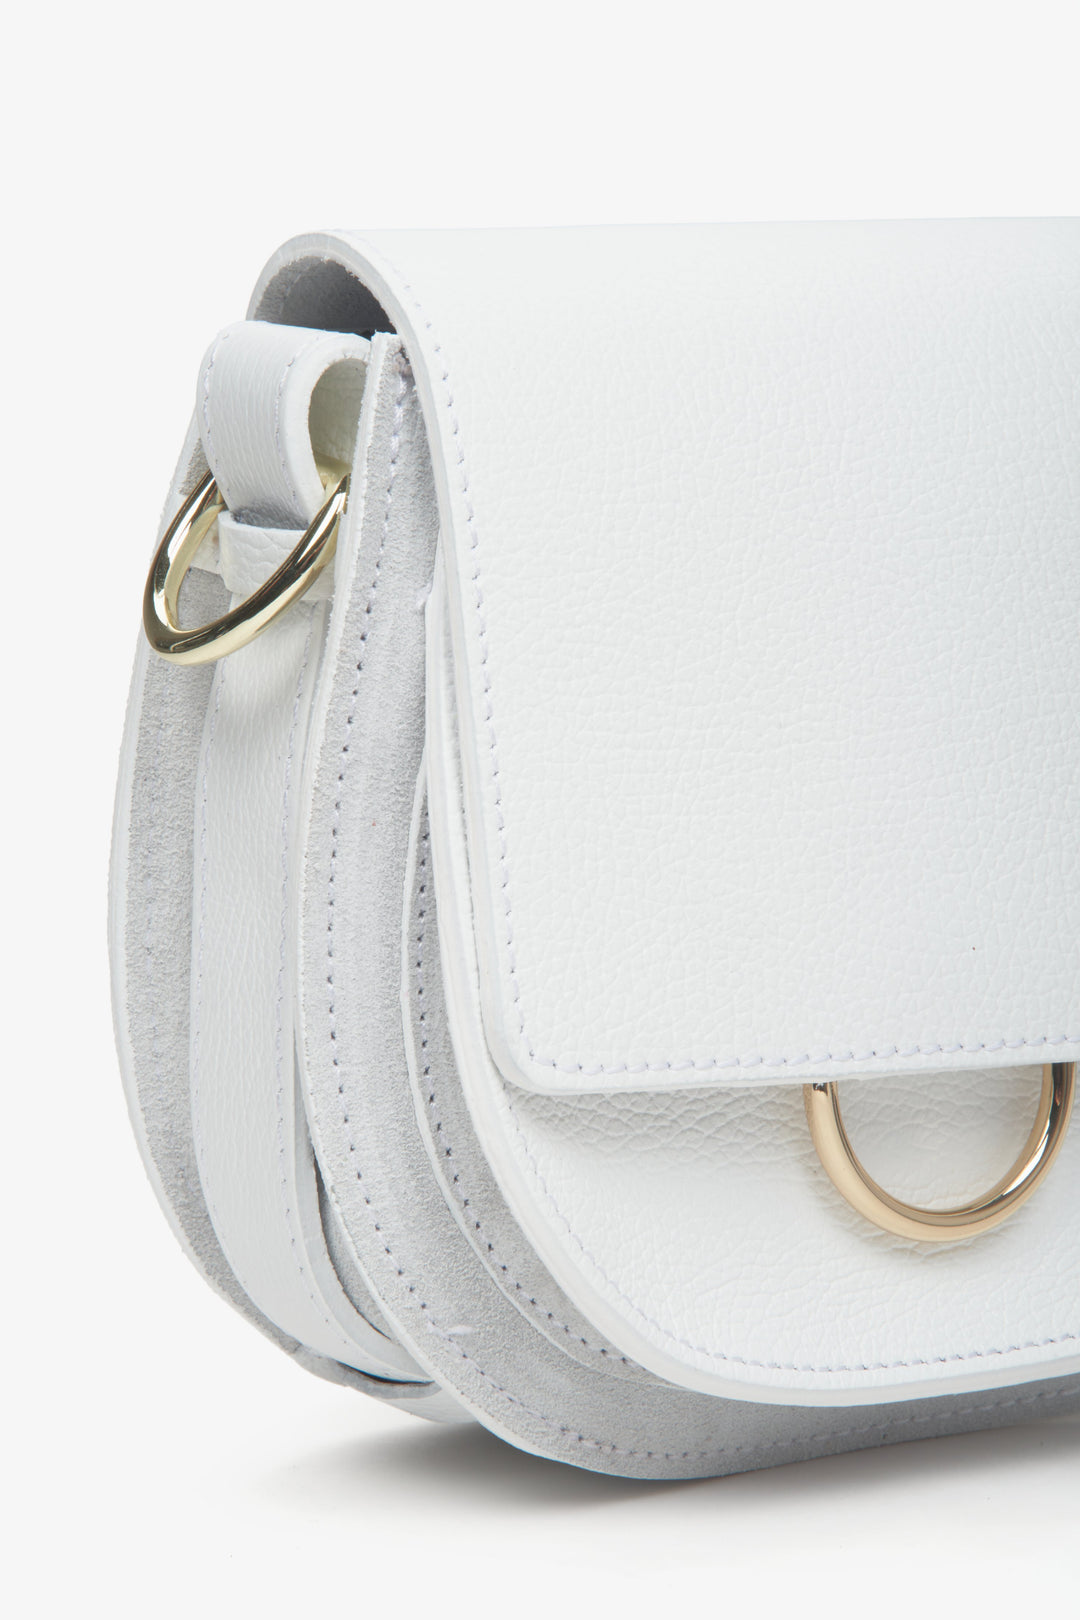 Small Italian leather white crossbody women's bag.